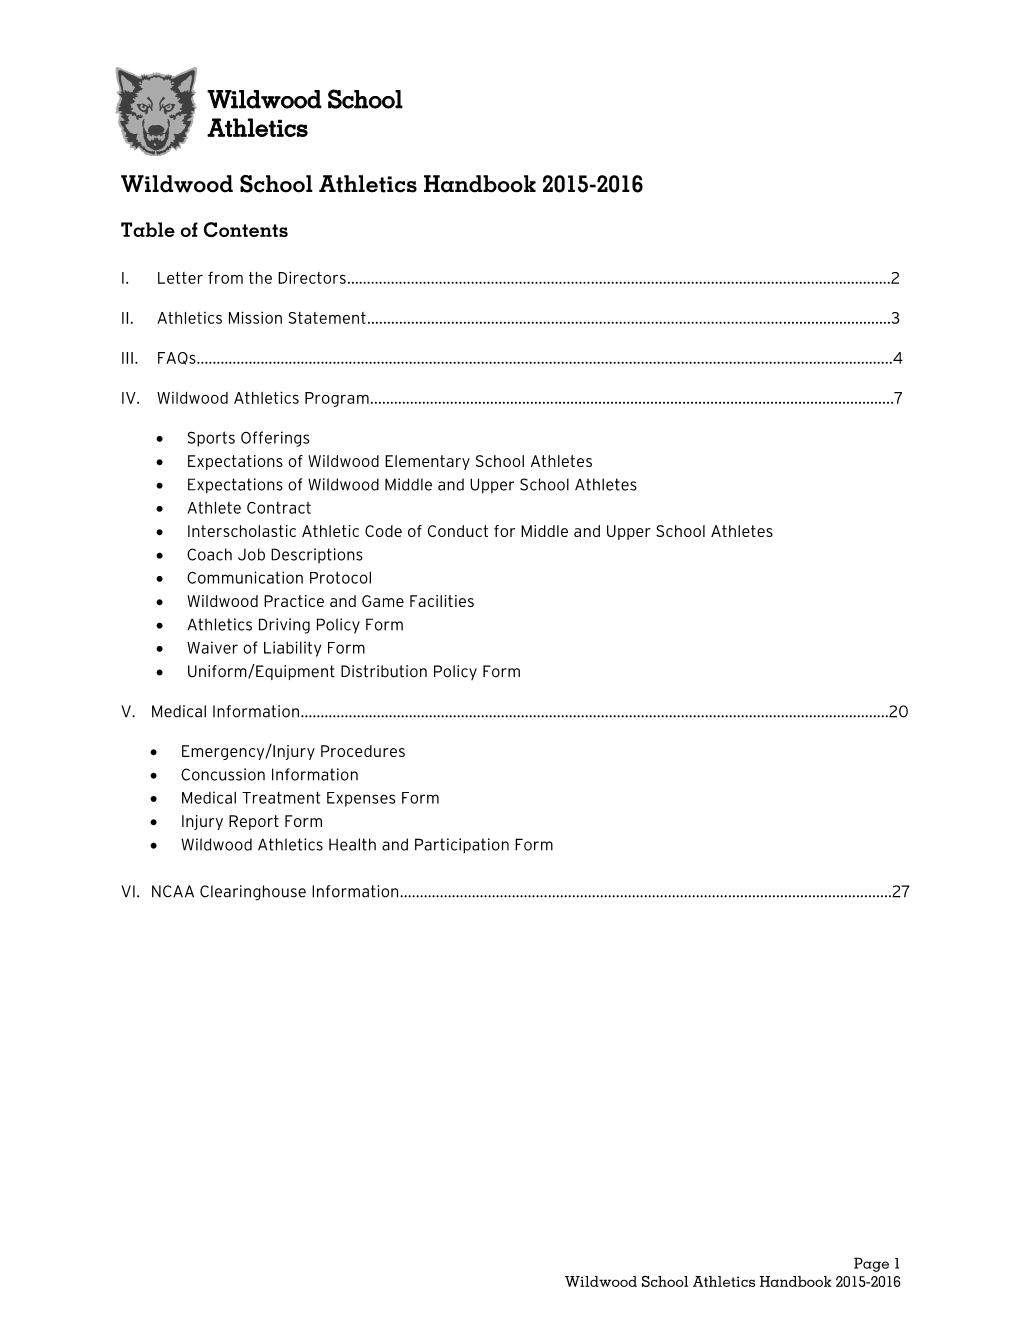 Wildwood School Athletics Handbook 2015-2016